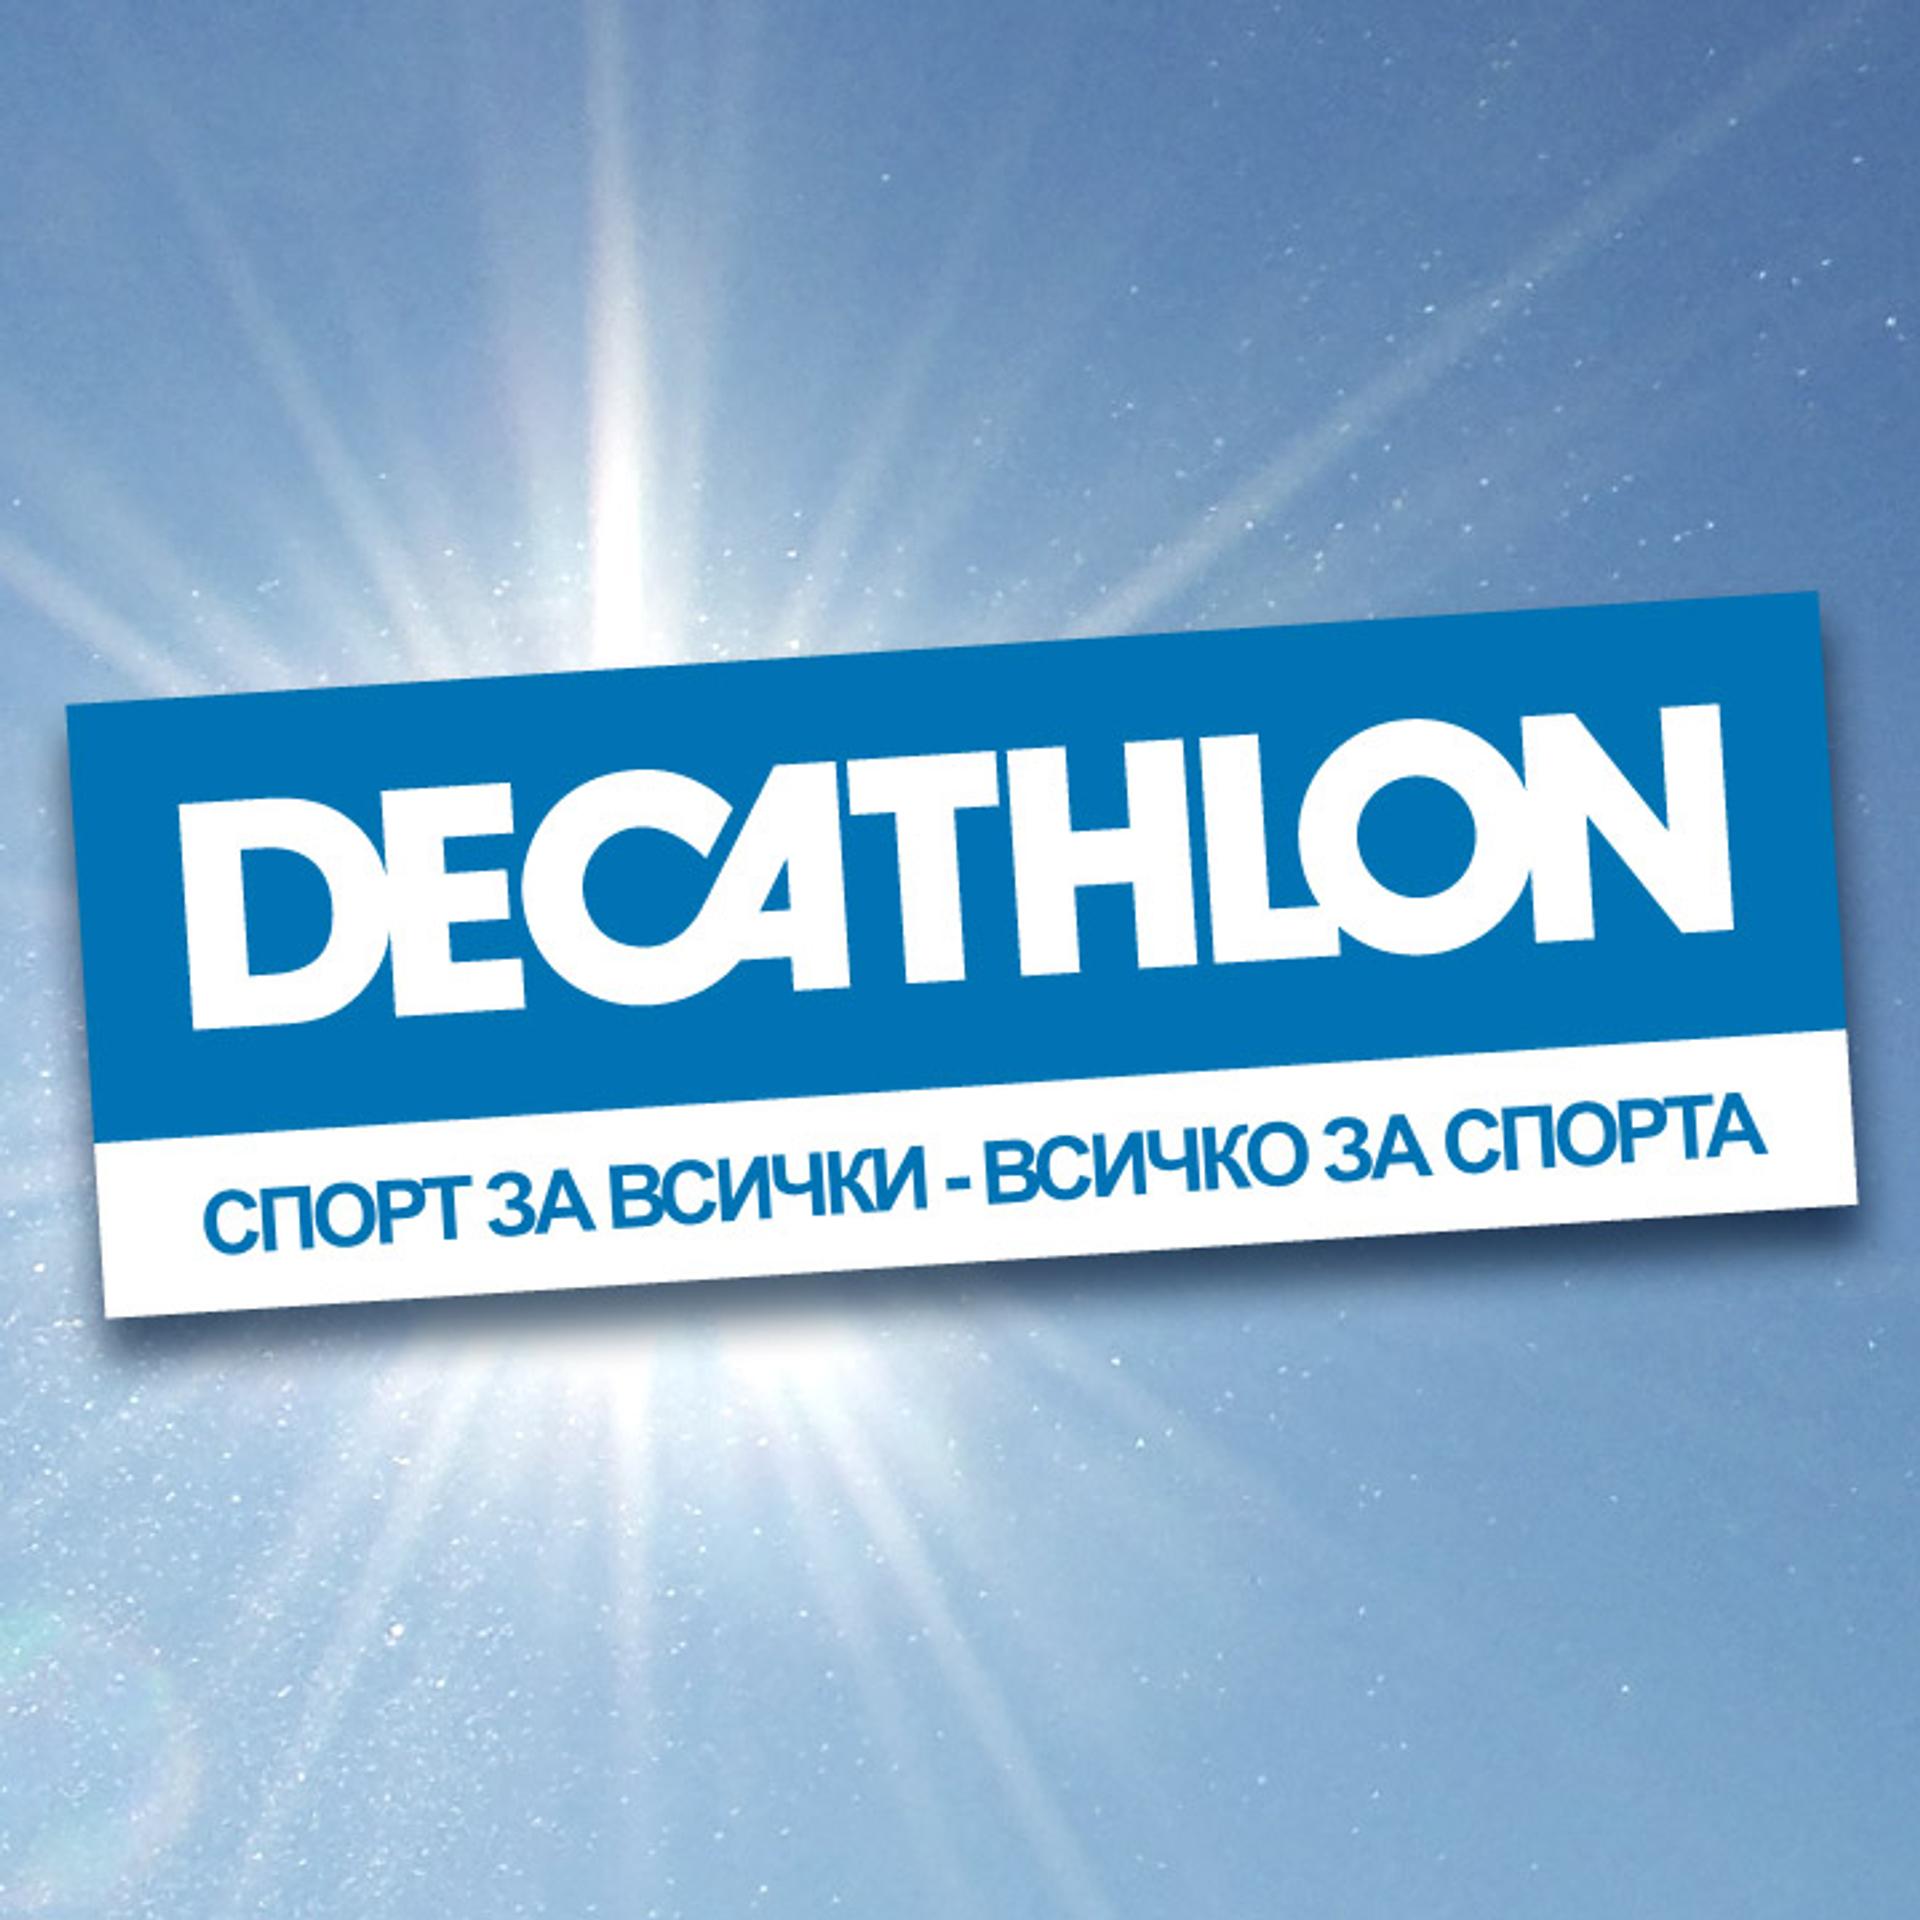 Decathlon Bulgaria